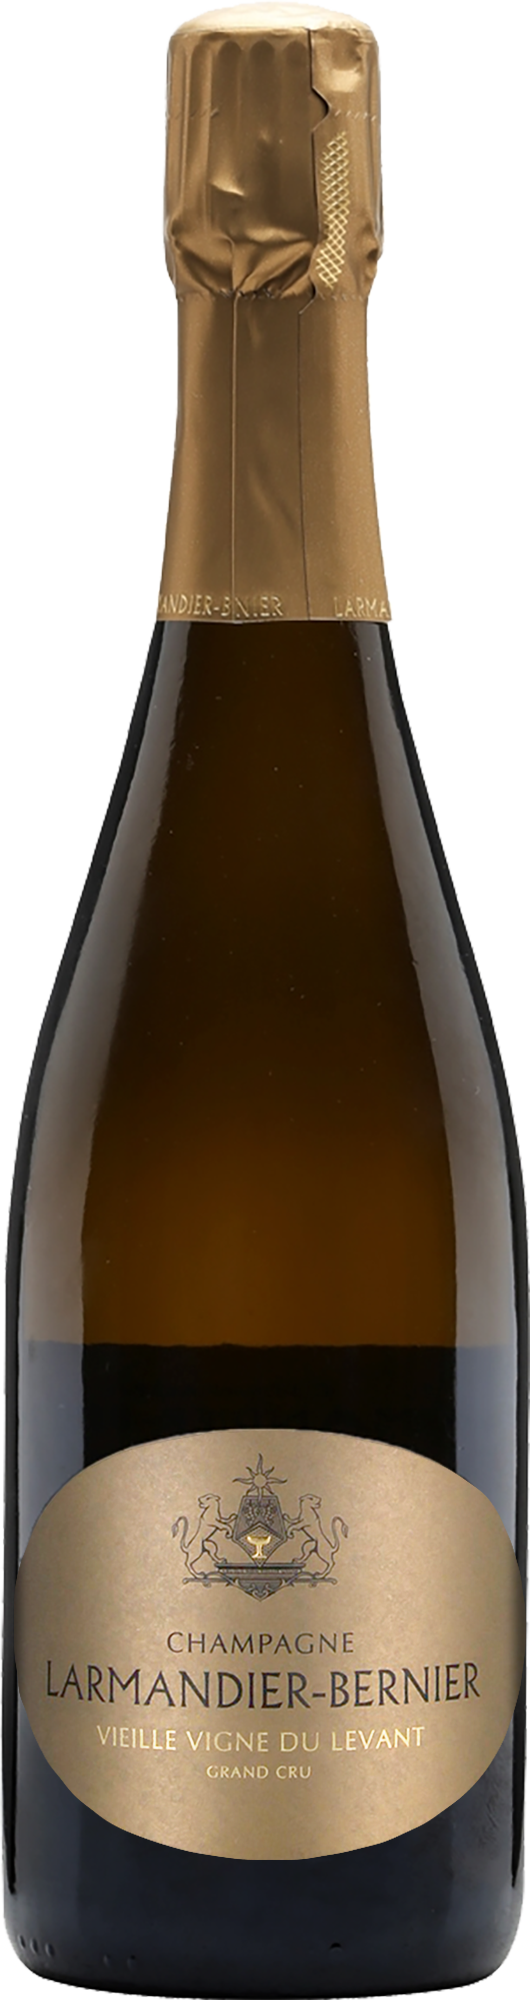 Champagne Larmandier-Bernier Grand Cru Vieille Vigne du Levant 2012 (Disg. June 2021)